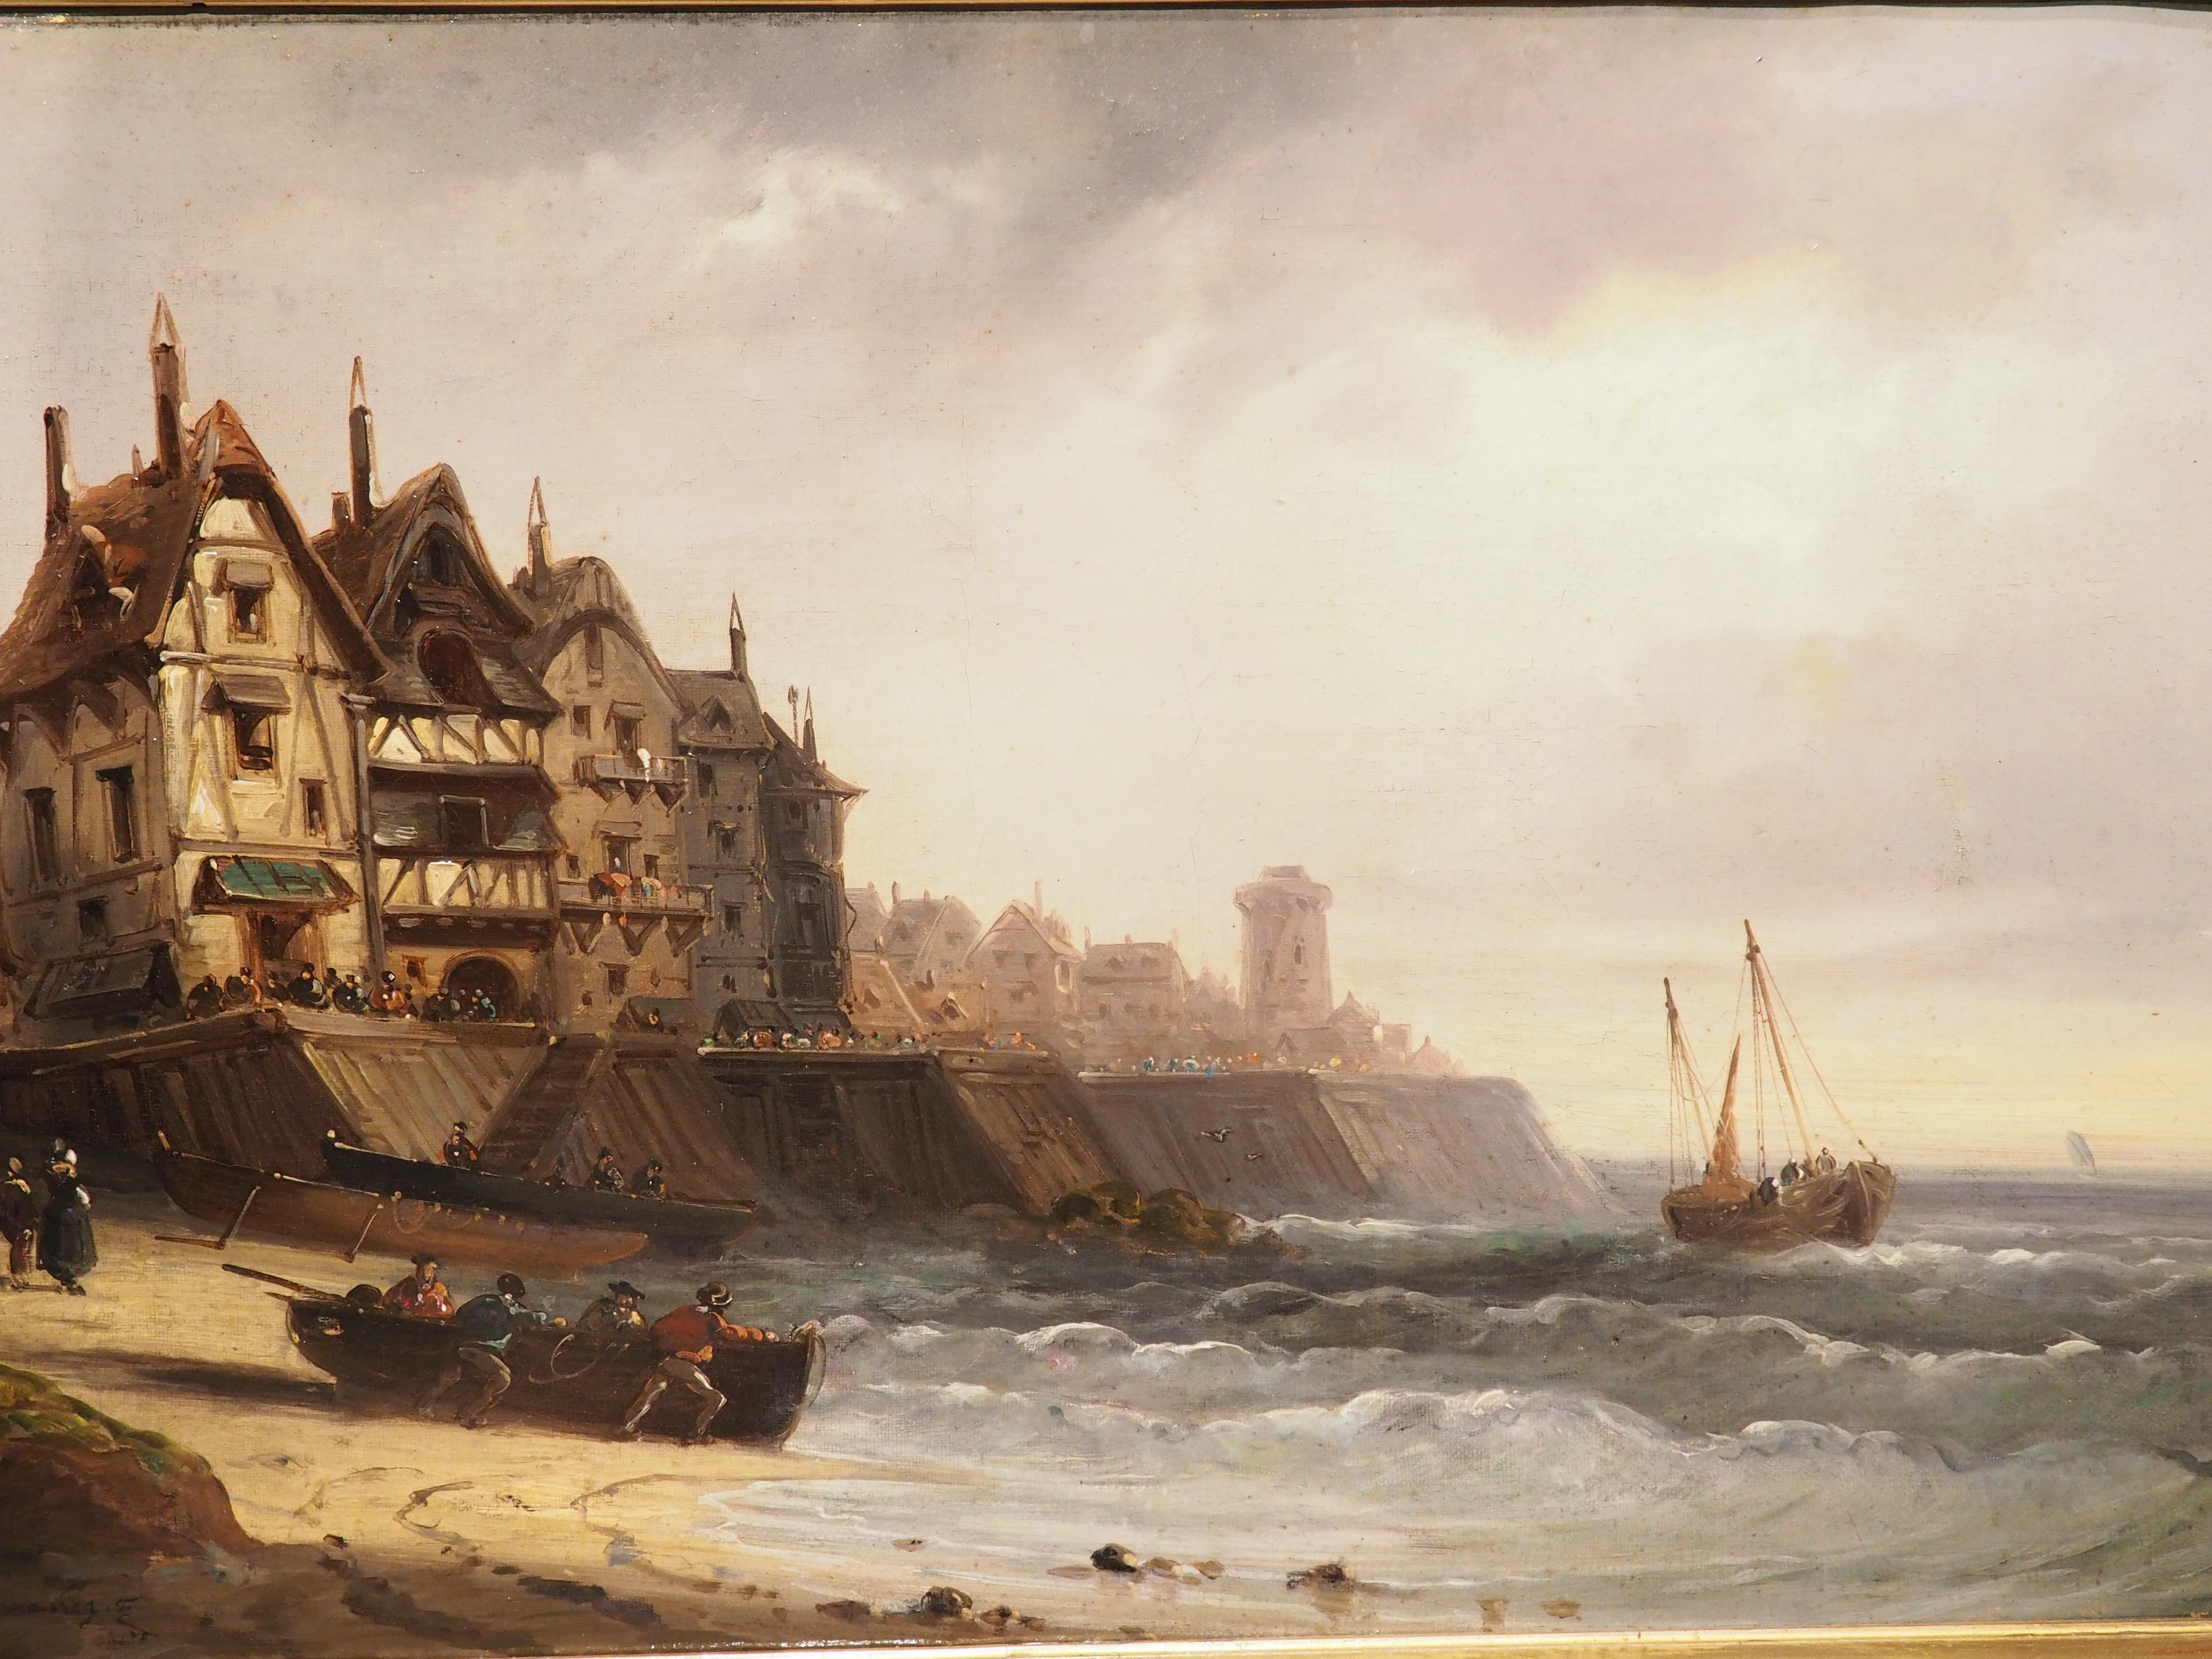 Hand-Painted 19th Century French Coastal Landscape Painting, Signed Kuwasseg For Sale